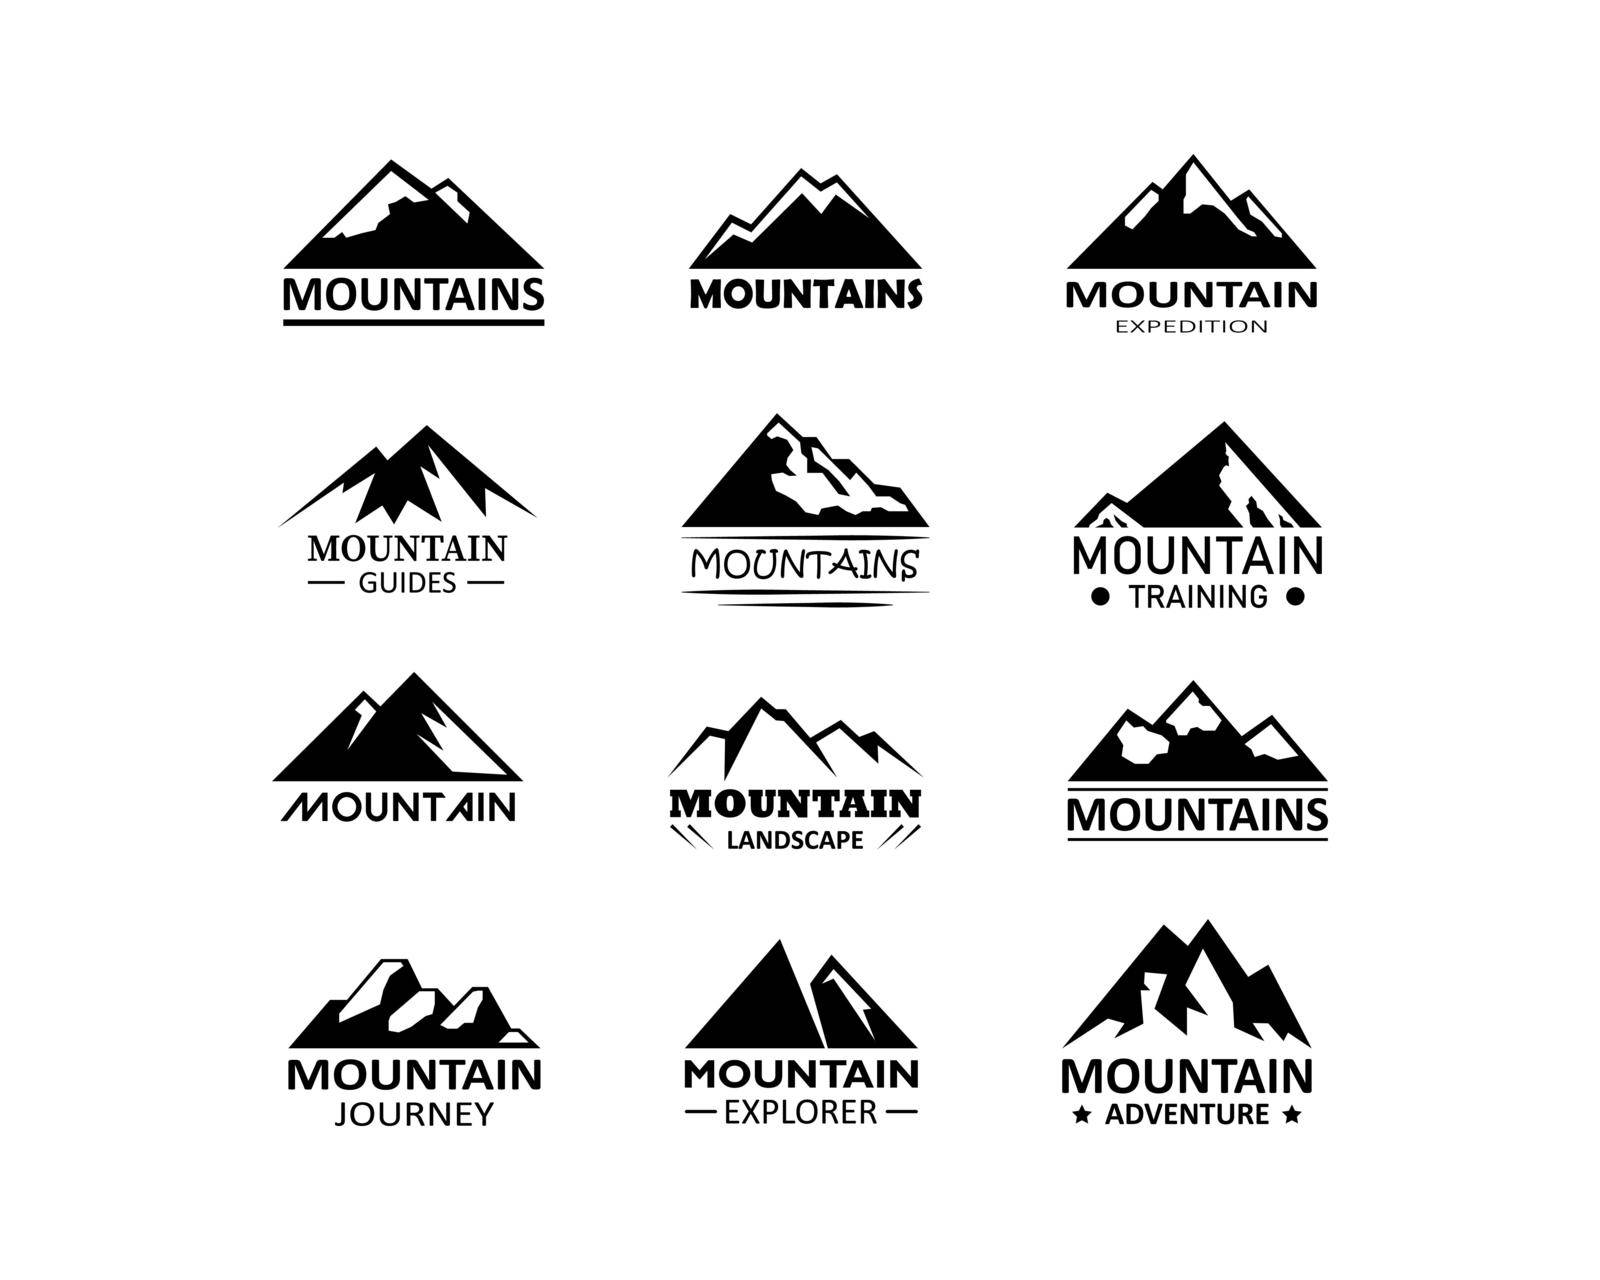 Mountains logos icons. Mountain tourism and adventure in the mountains